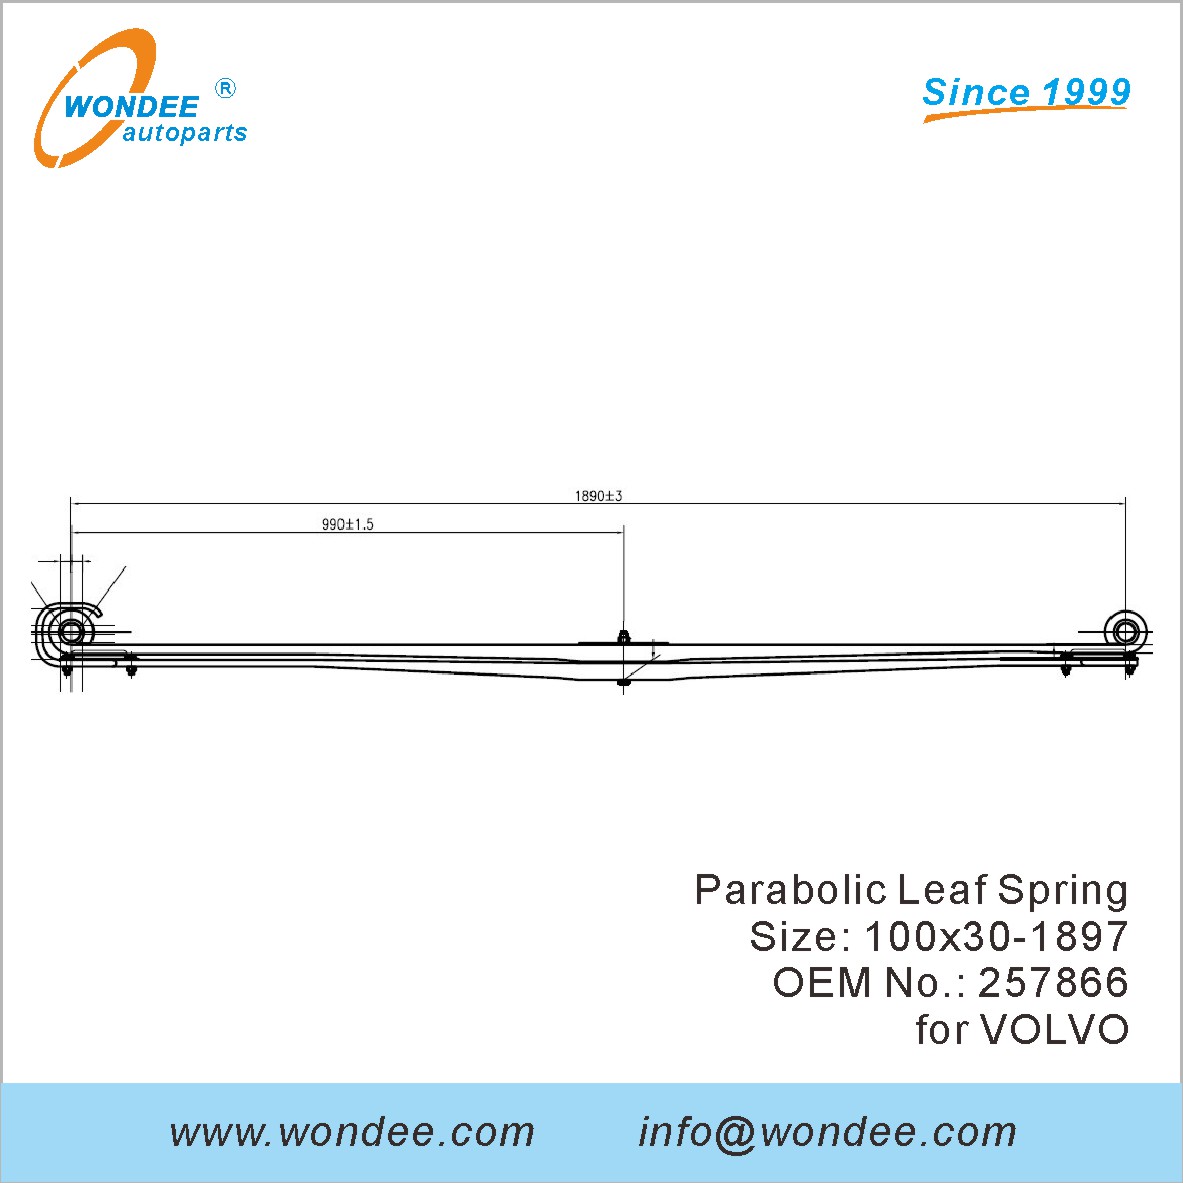 WONDEE light duty parabolic Leaf Spring OEM 257866 for VOLVO